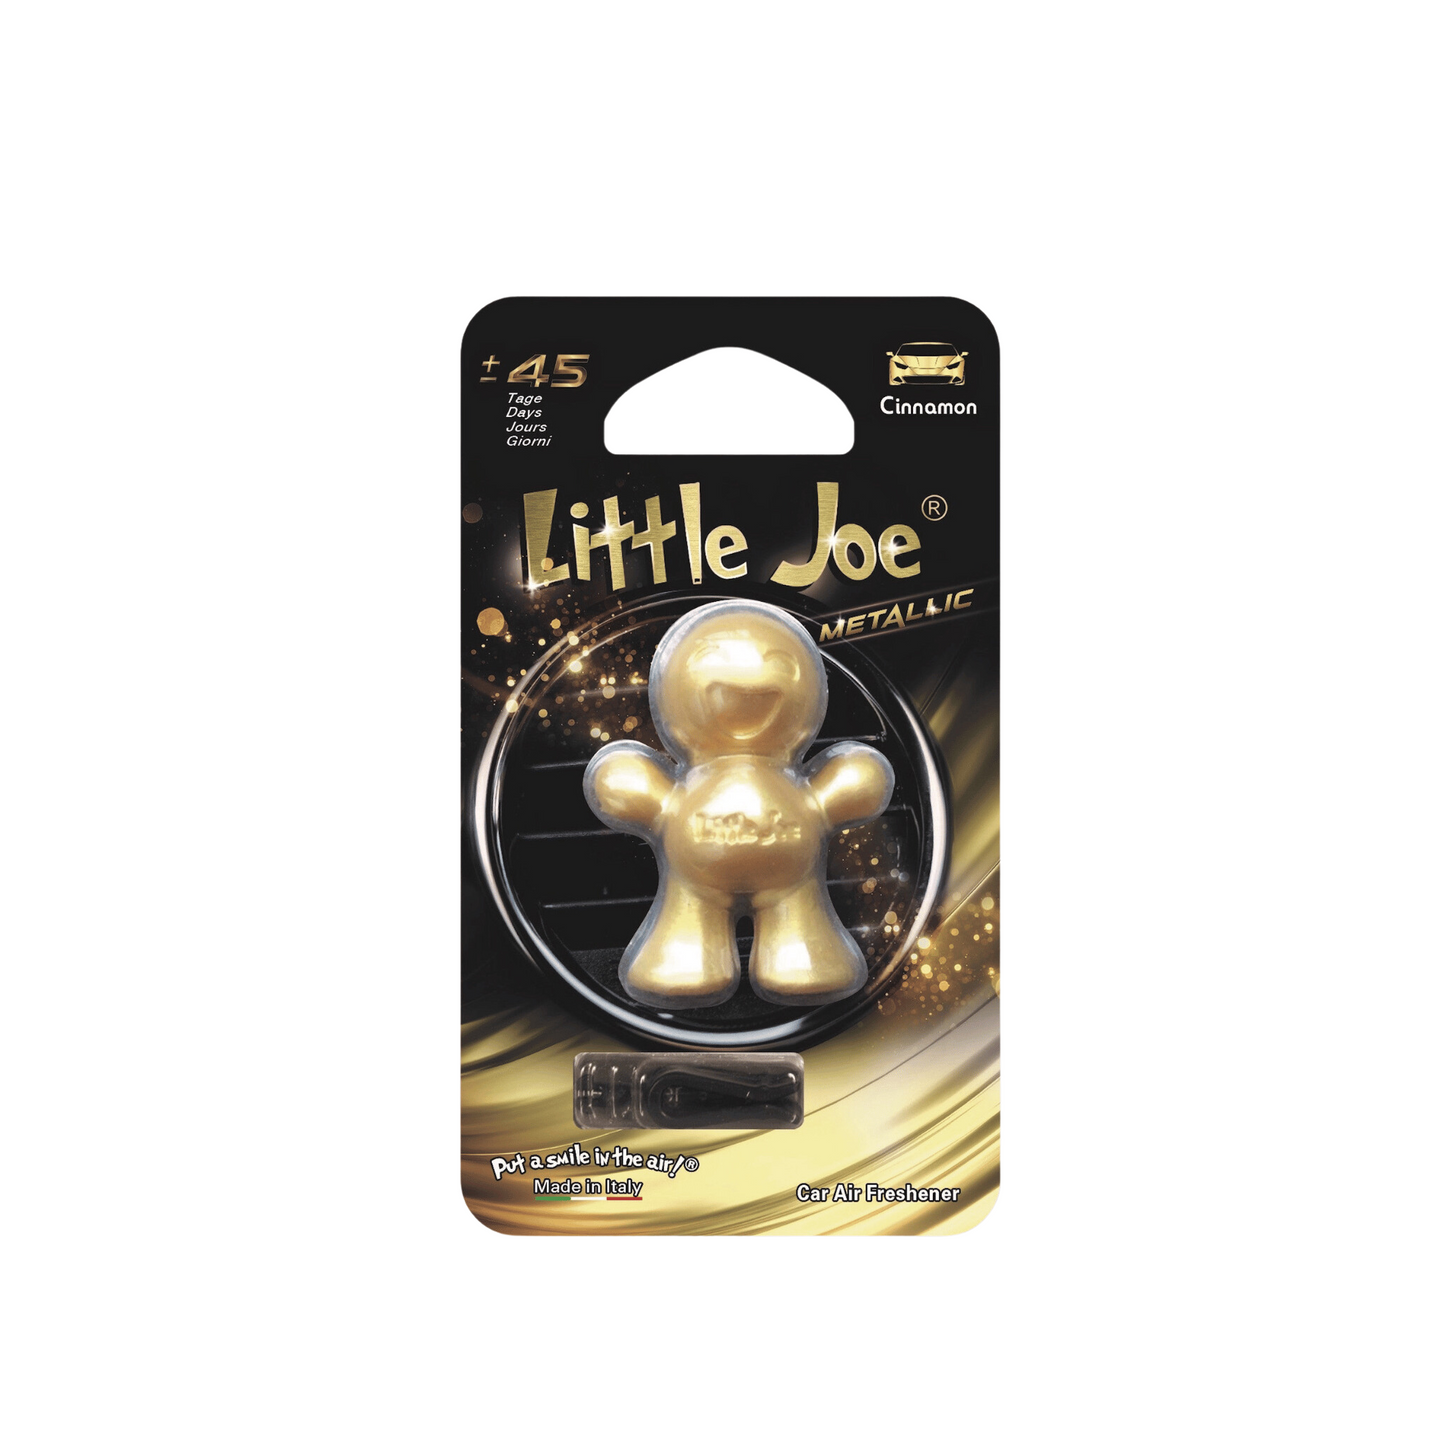 Little Joe - Metallic Cinnamon